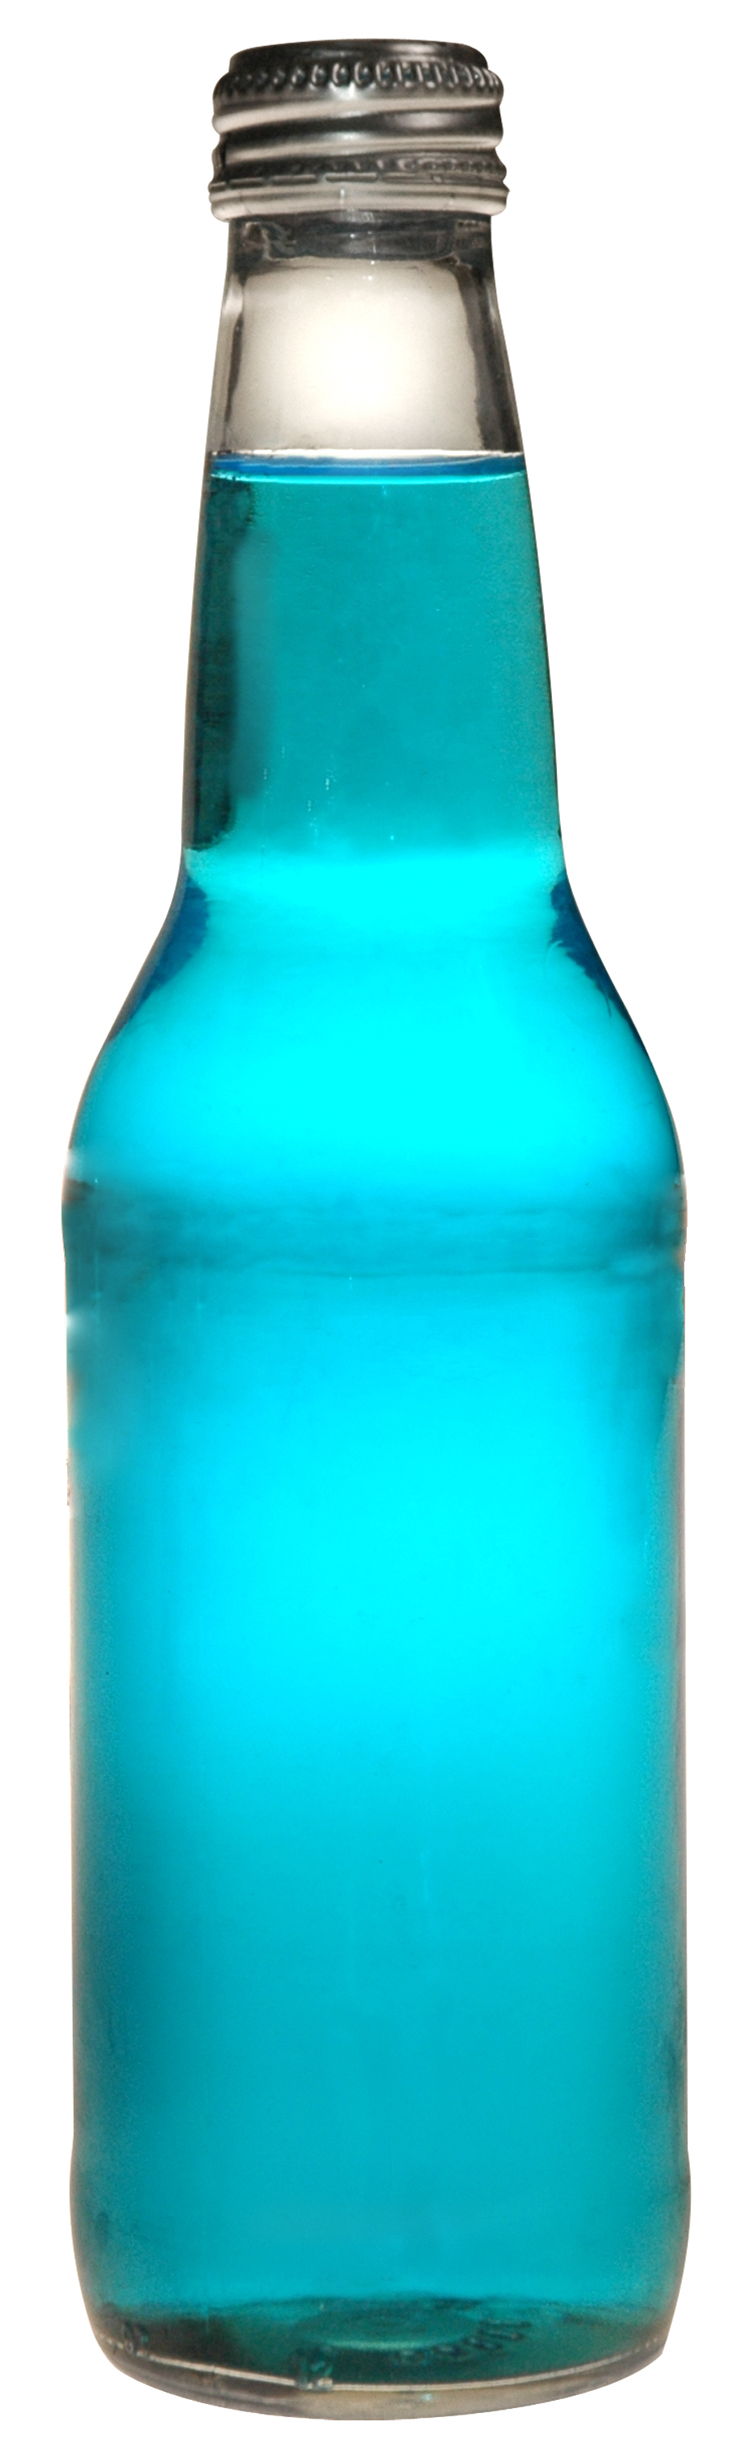 Picture Of Blue Soda Bottle